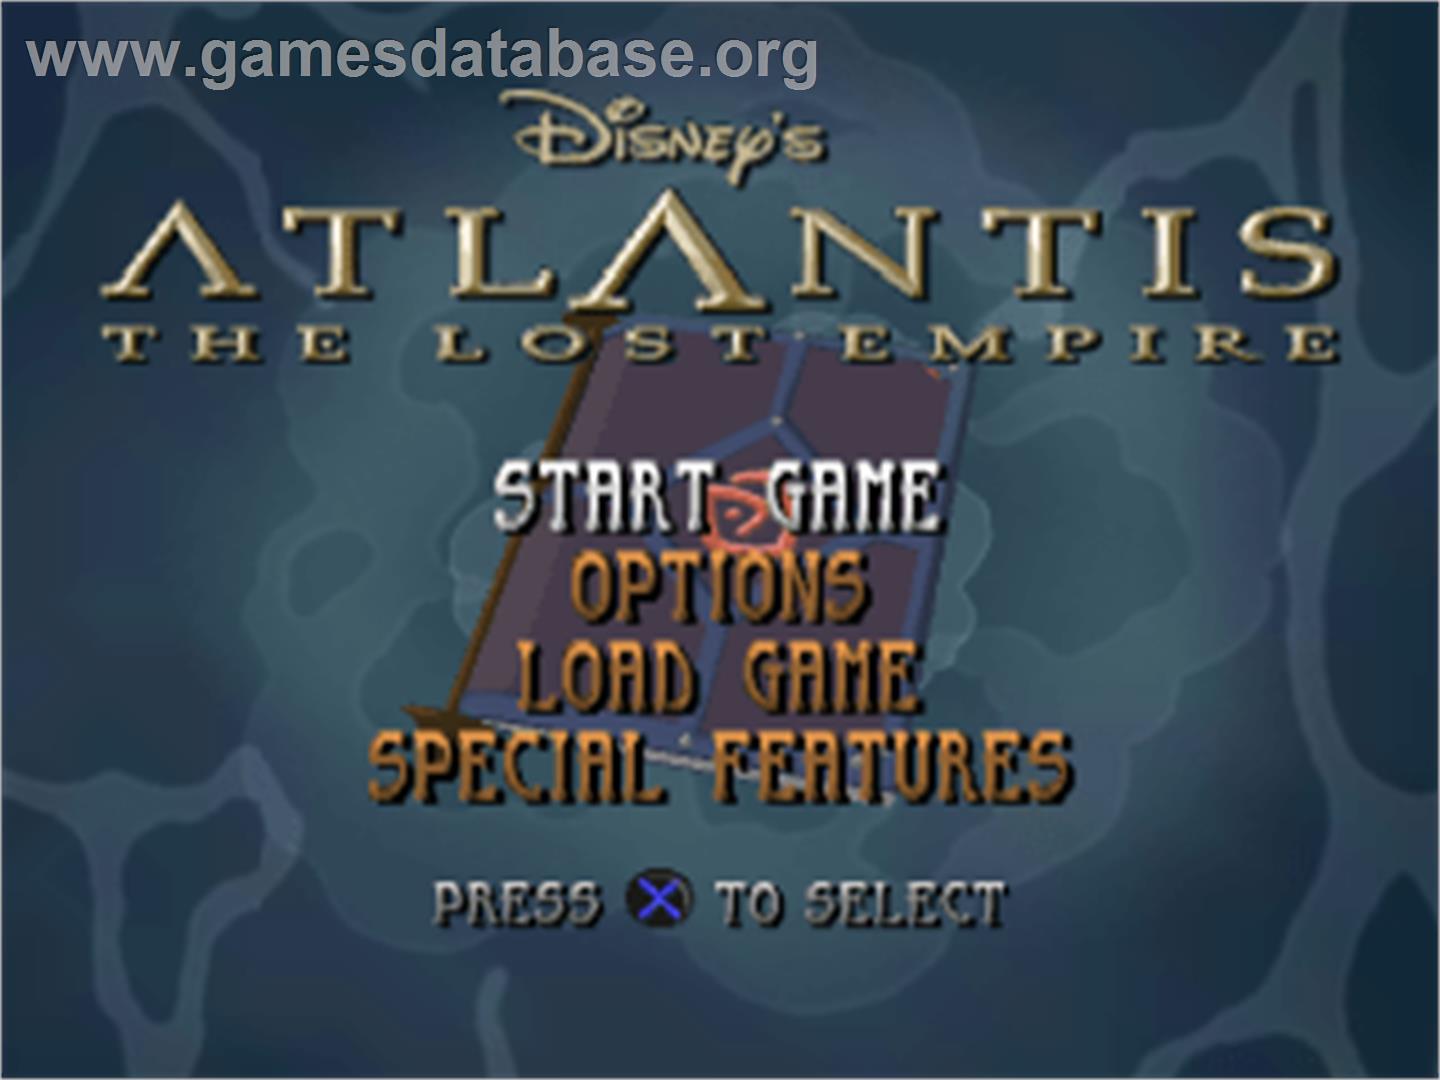 Disney's Atlantis: The Lost Empire - Sony Playstation - Artwork - Title Screen